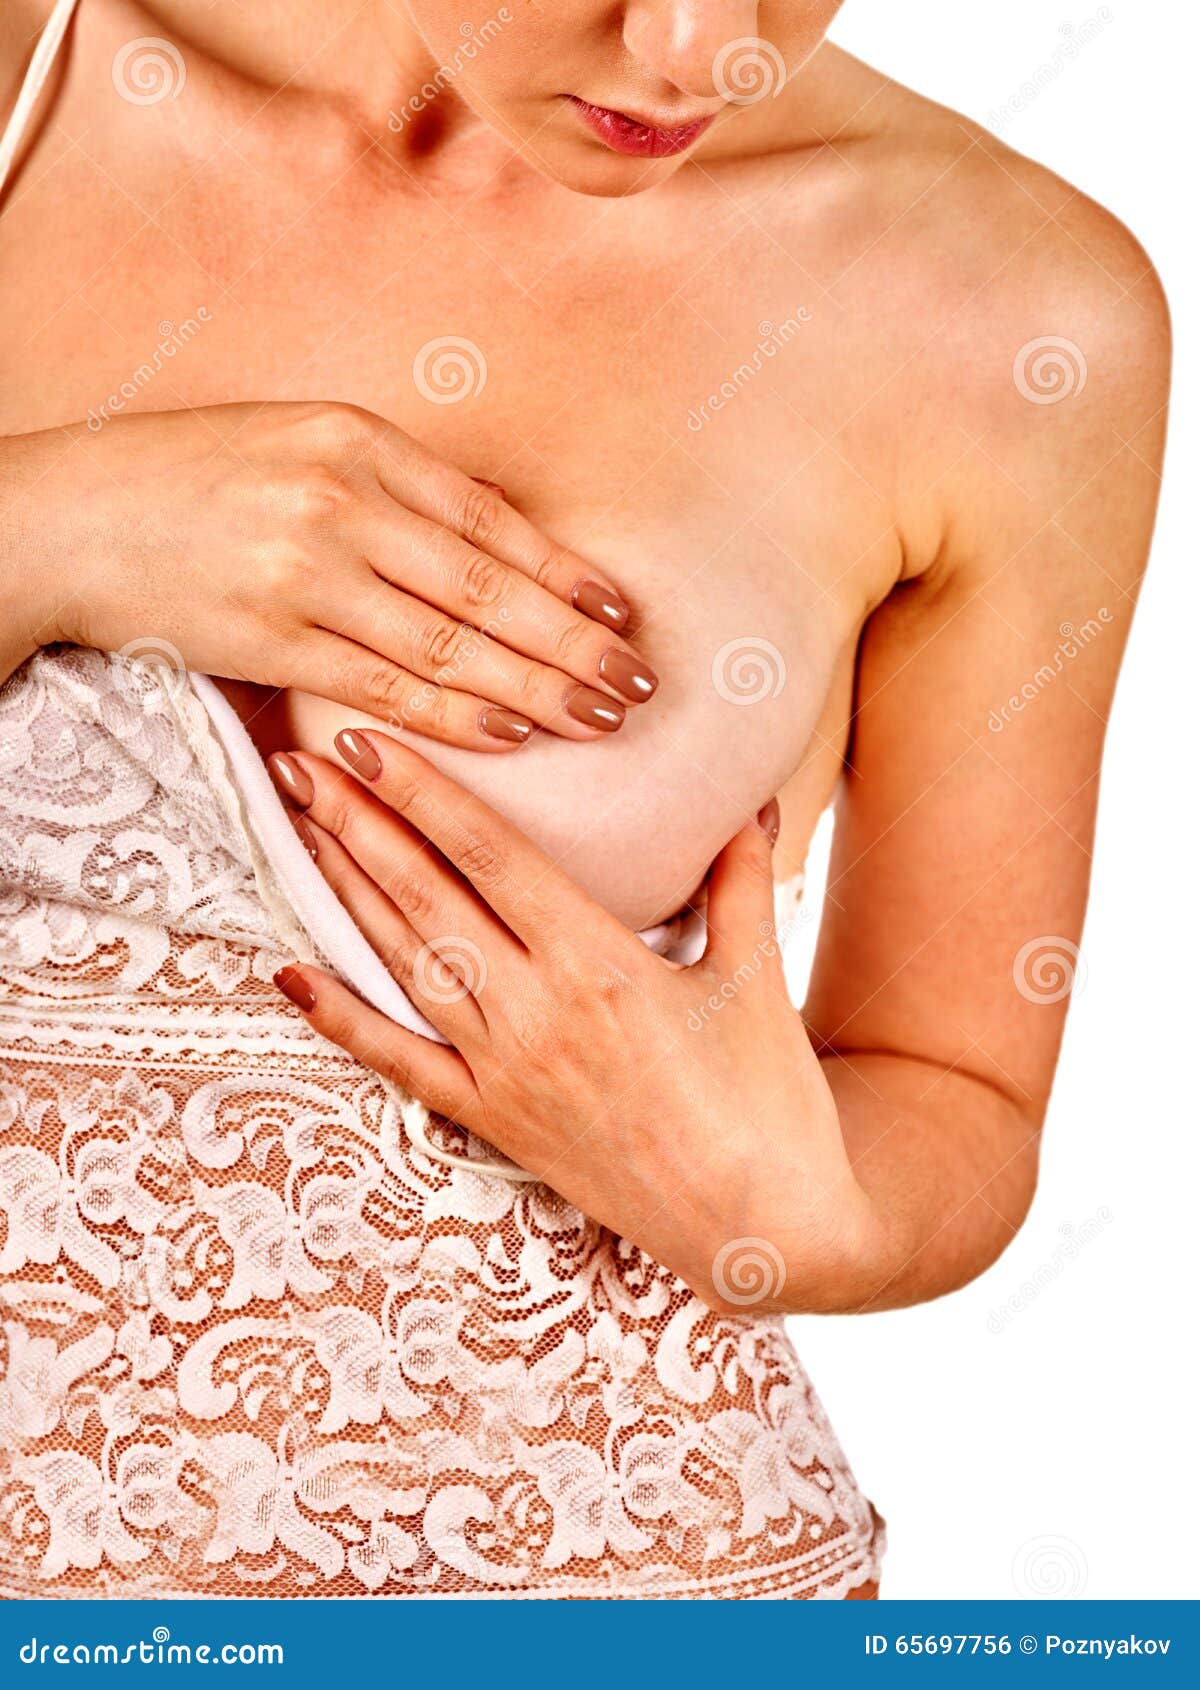 Beautiful Girl Touching Her Breasts